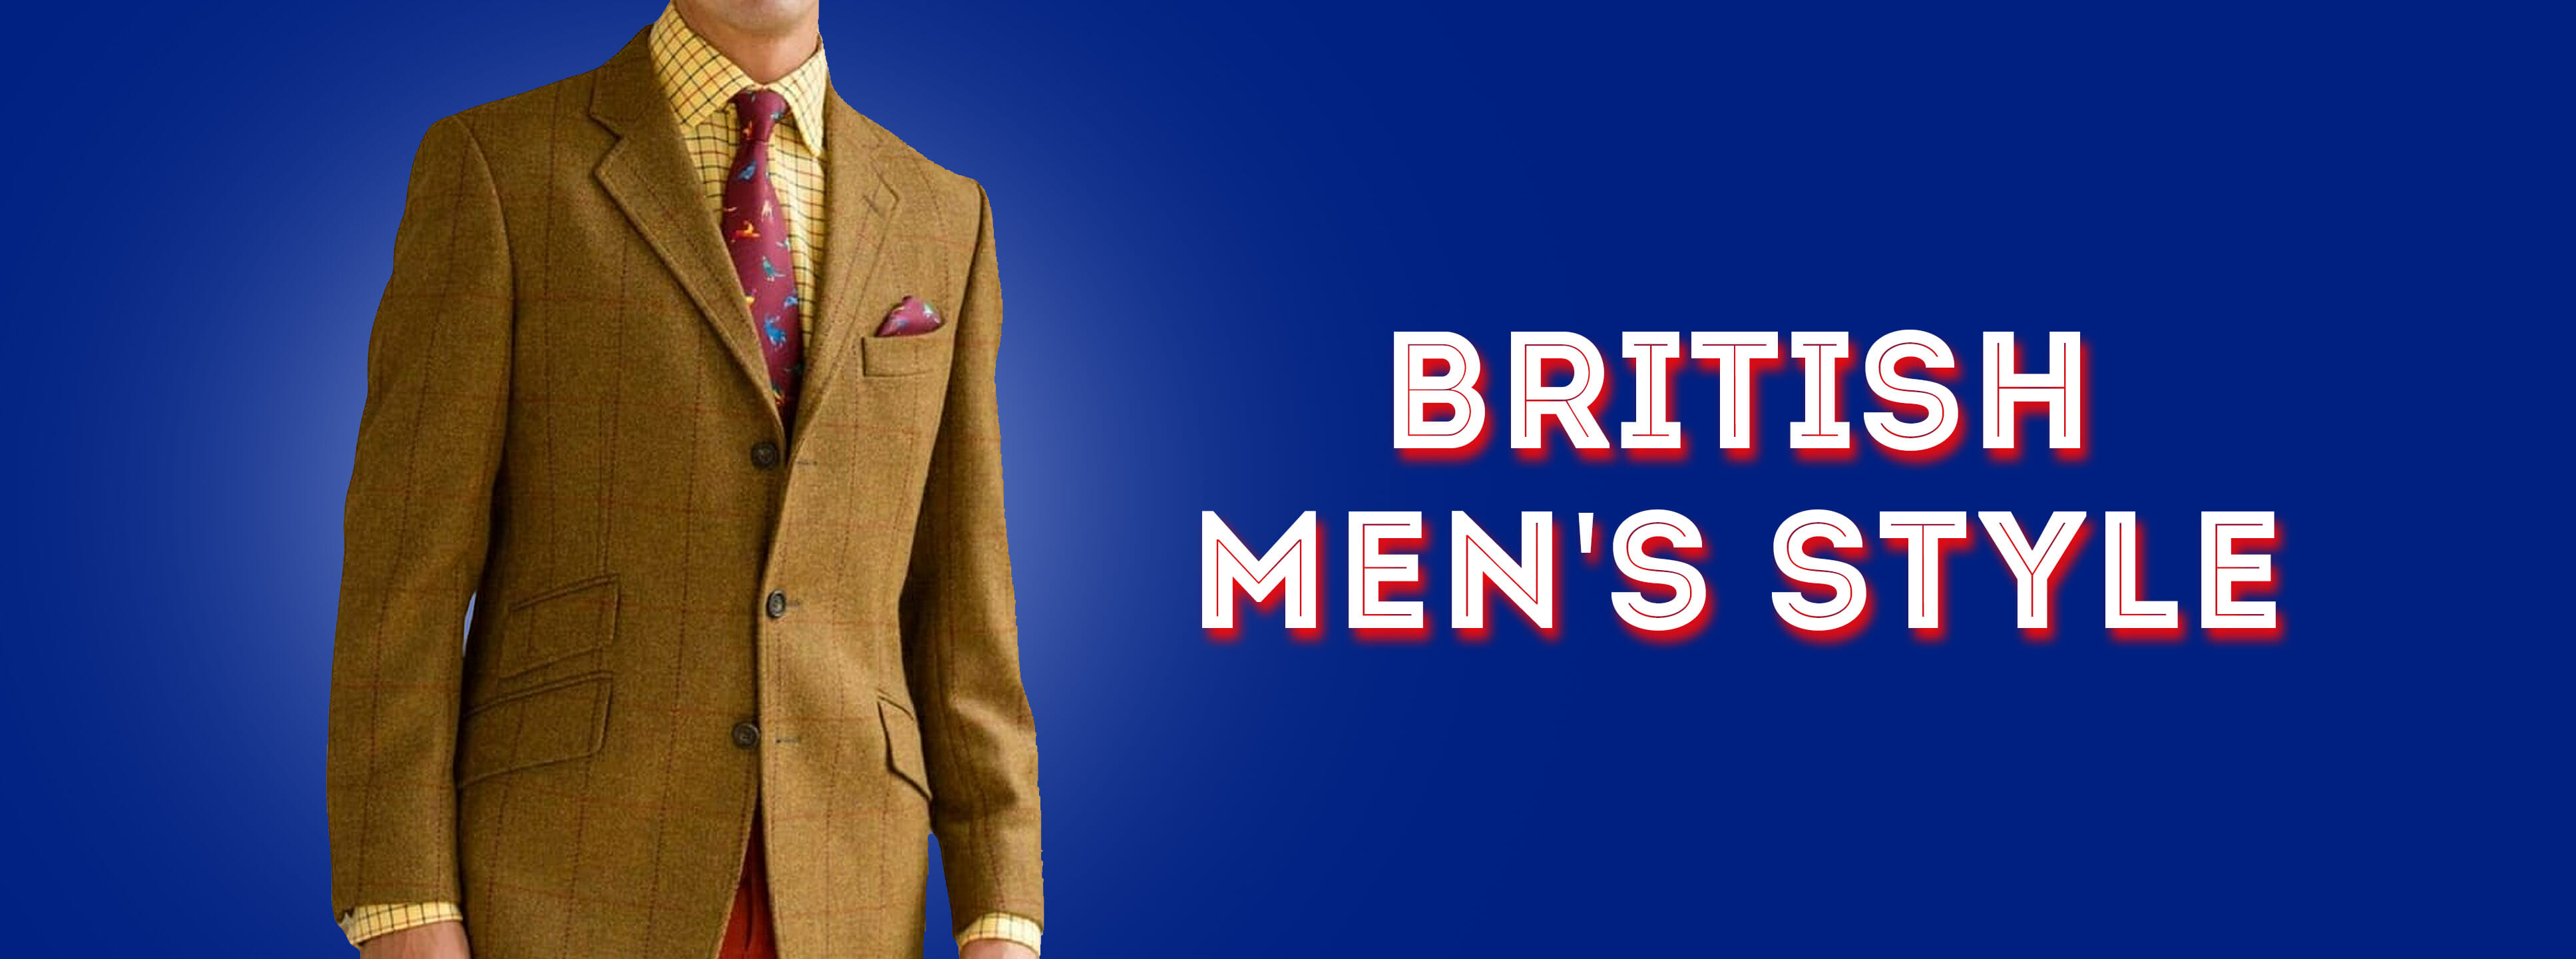 Menswear brands online, men's style at